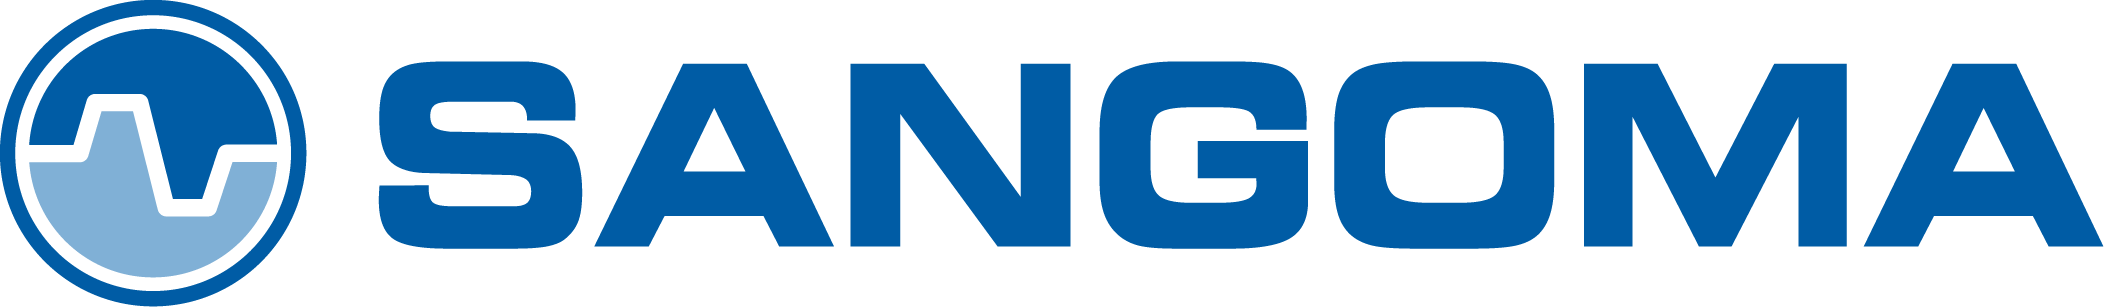 Sangoma-logo